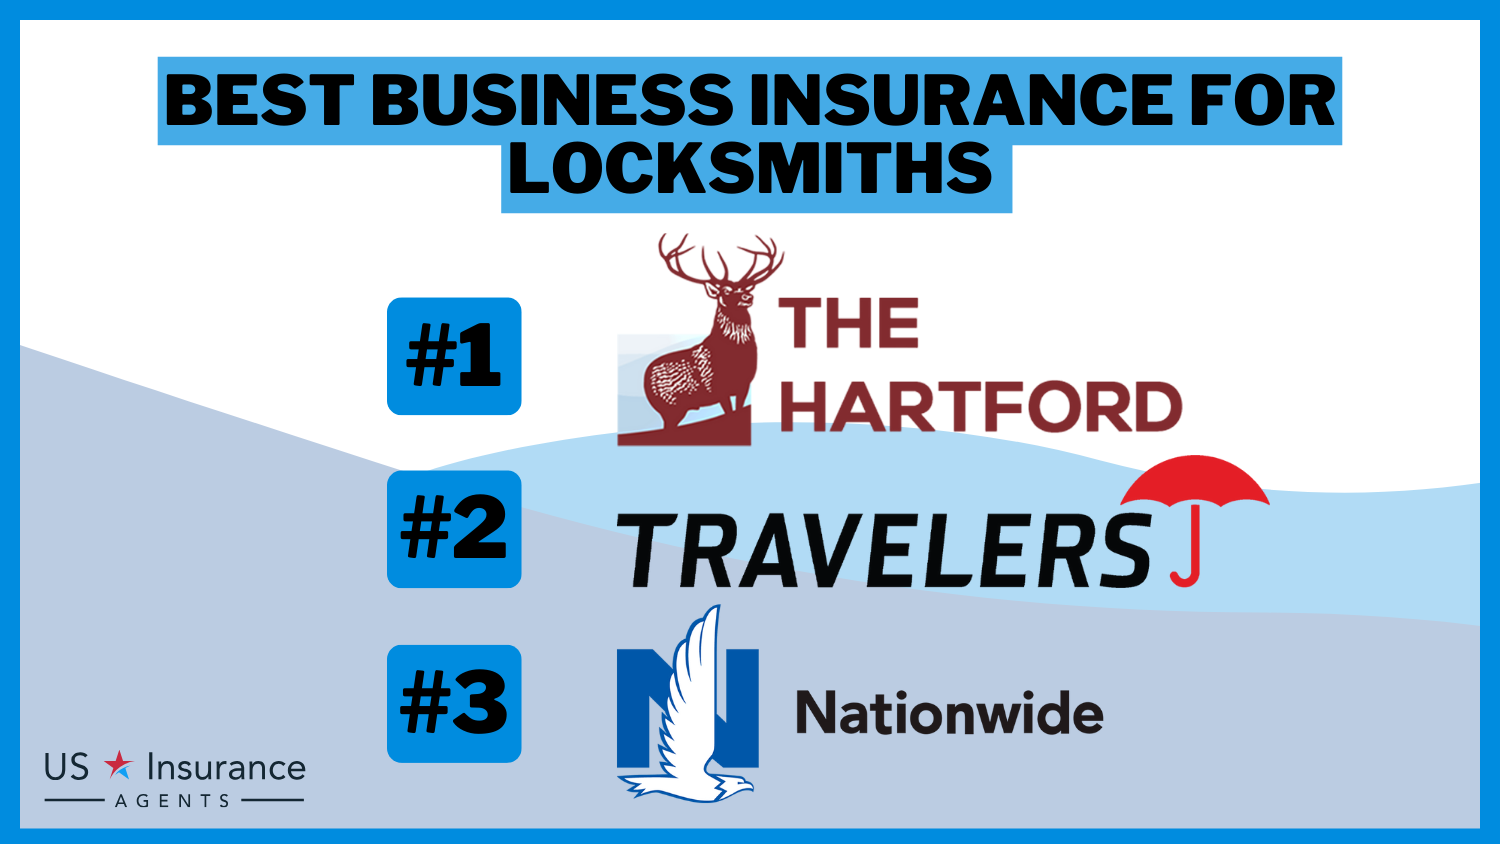 The Hartford, Travelers, Nationwide: Best Business Insurance for Locksmiths